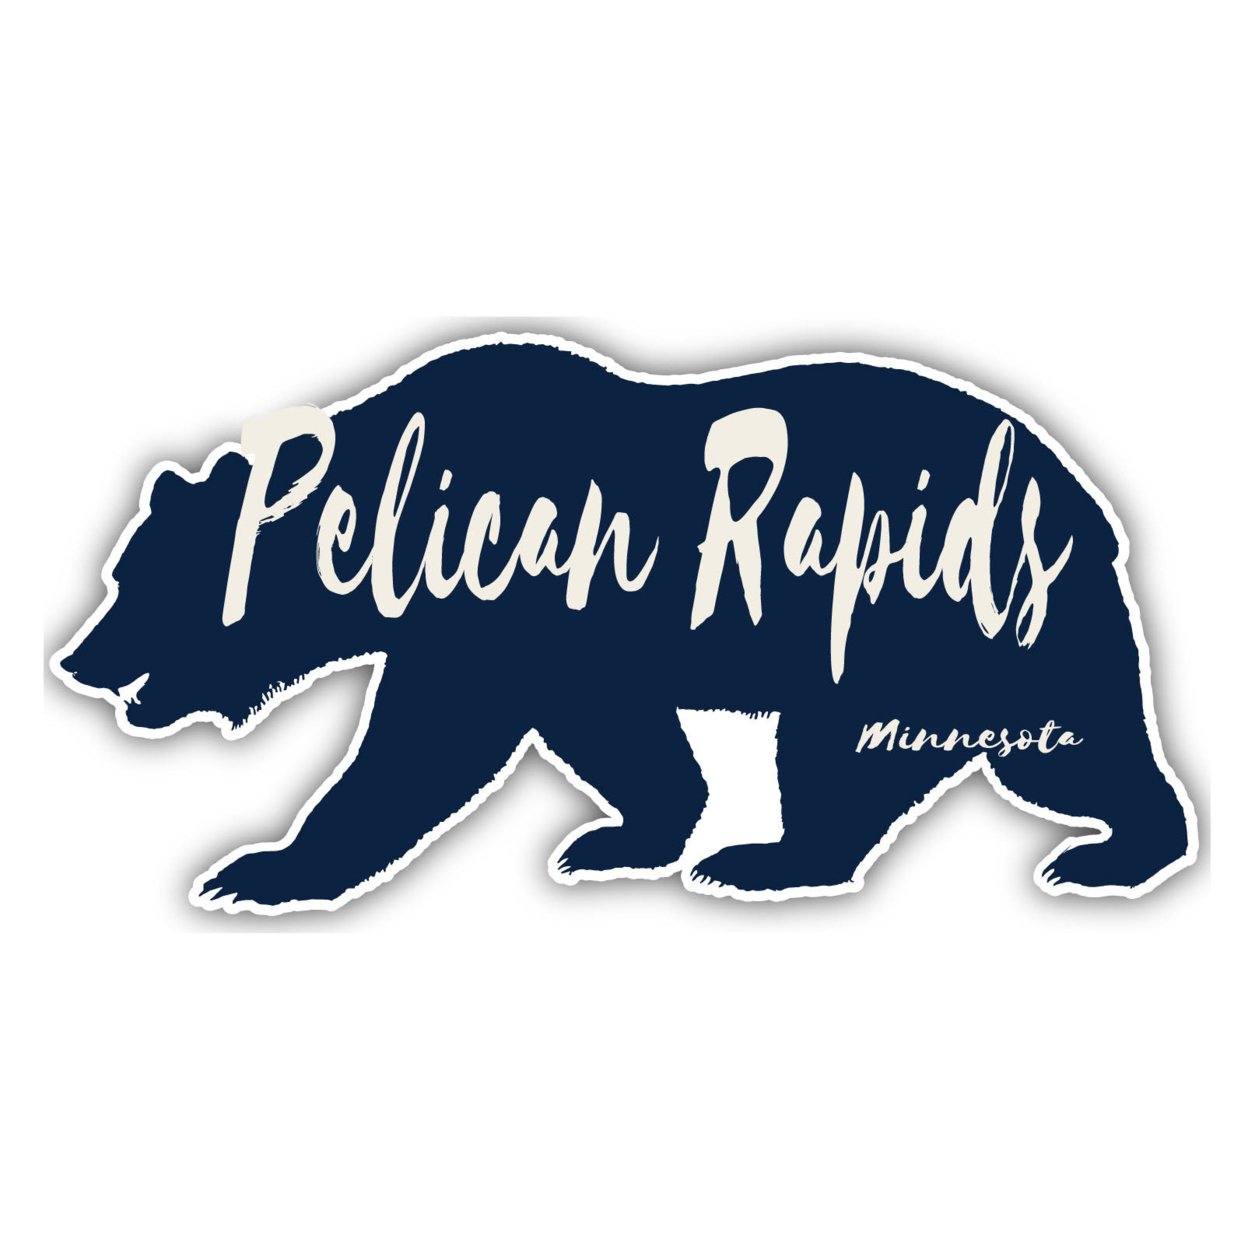 Pelican Rapids Minnesota Souvenir Decorative Stickers (Choose Theme And Size) - Single Unit, 4-Inch, Camp Life